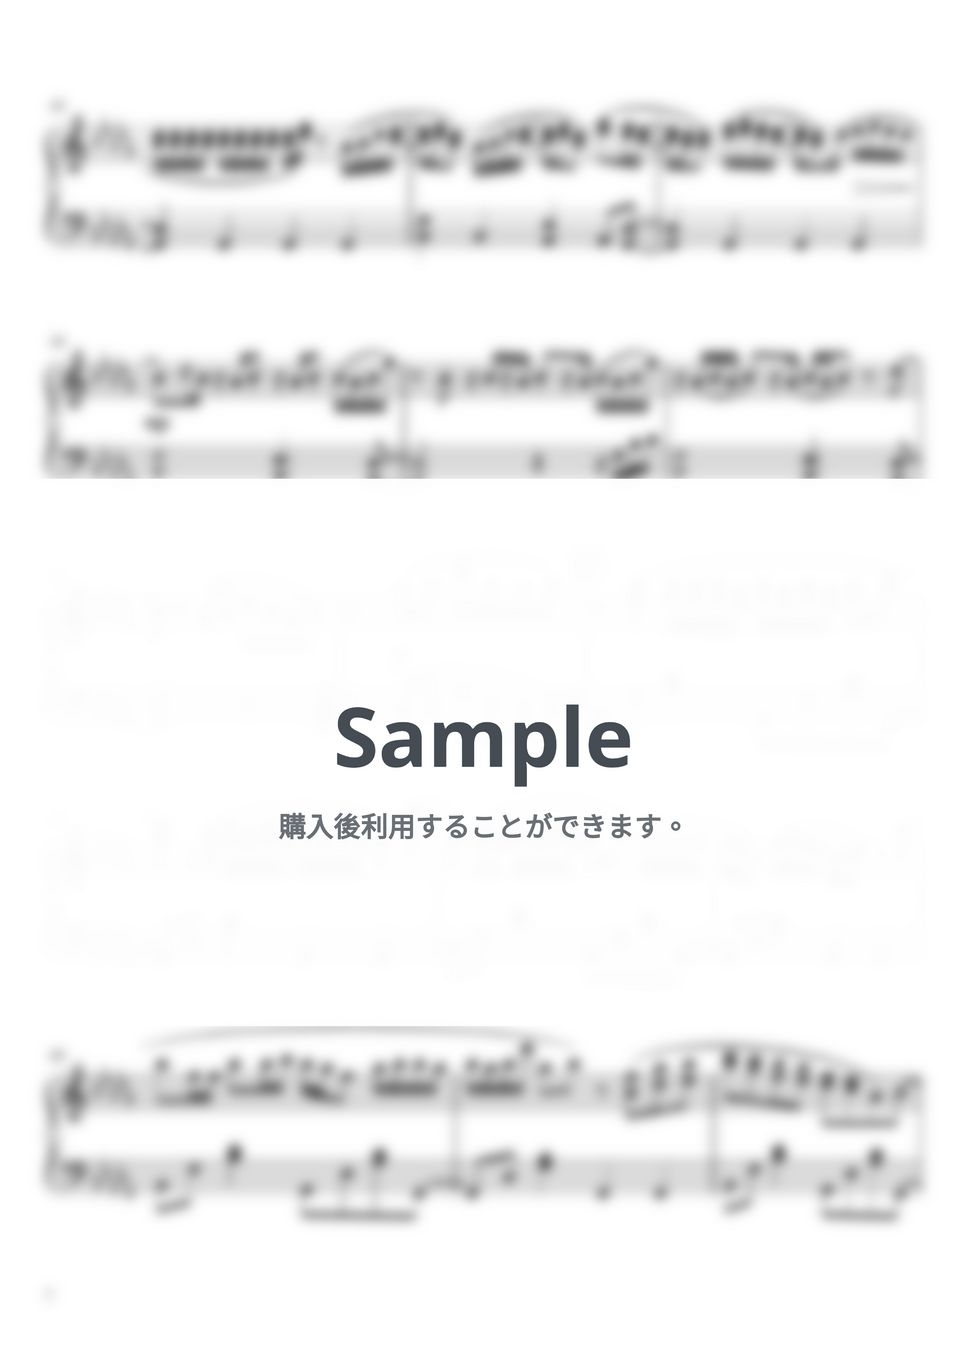 YOASOBI - もしも命が描けたら (ピアノソロ / 中級) by SuperMomoFactory